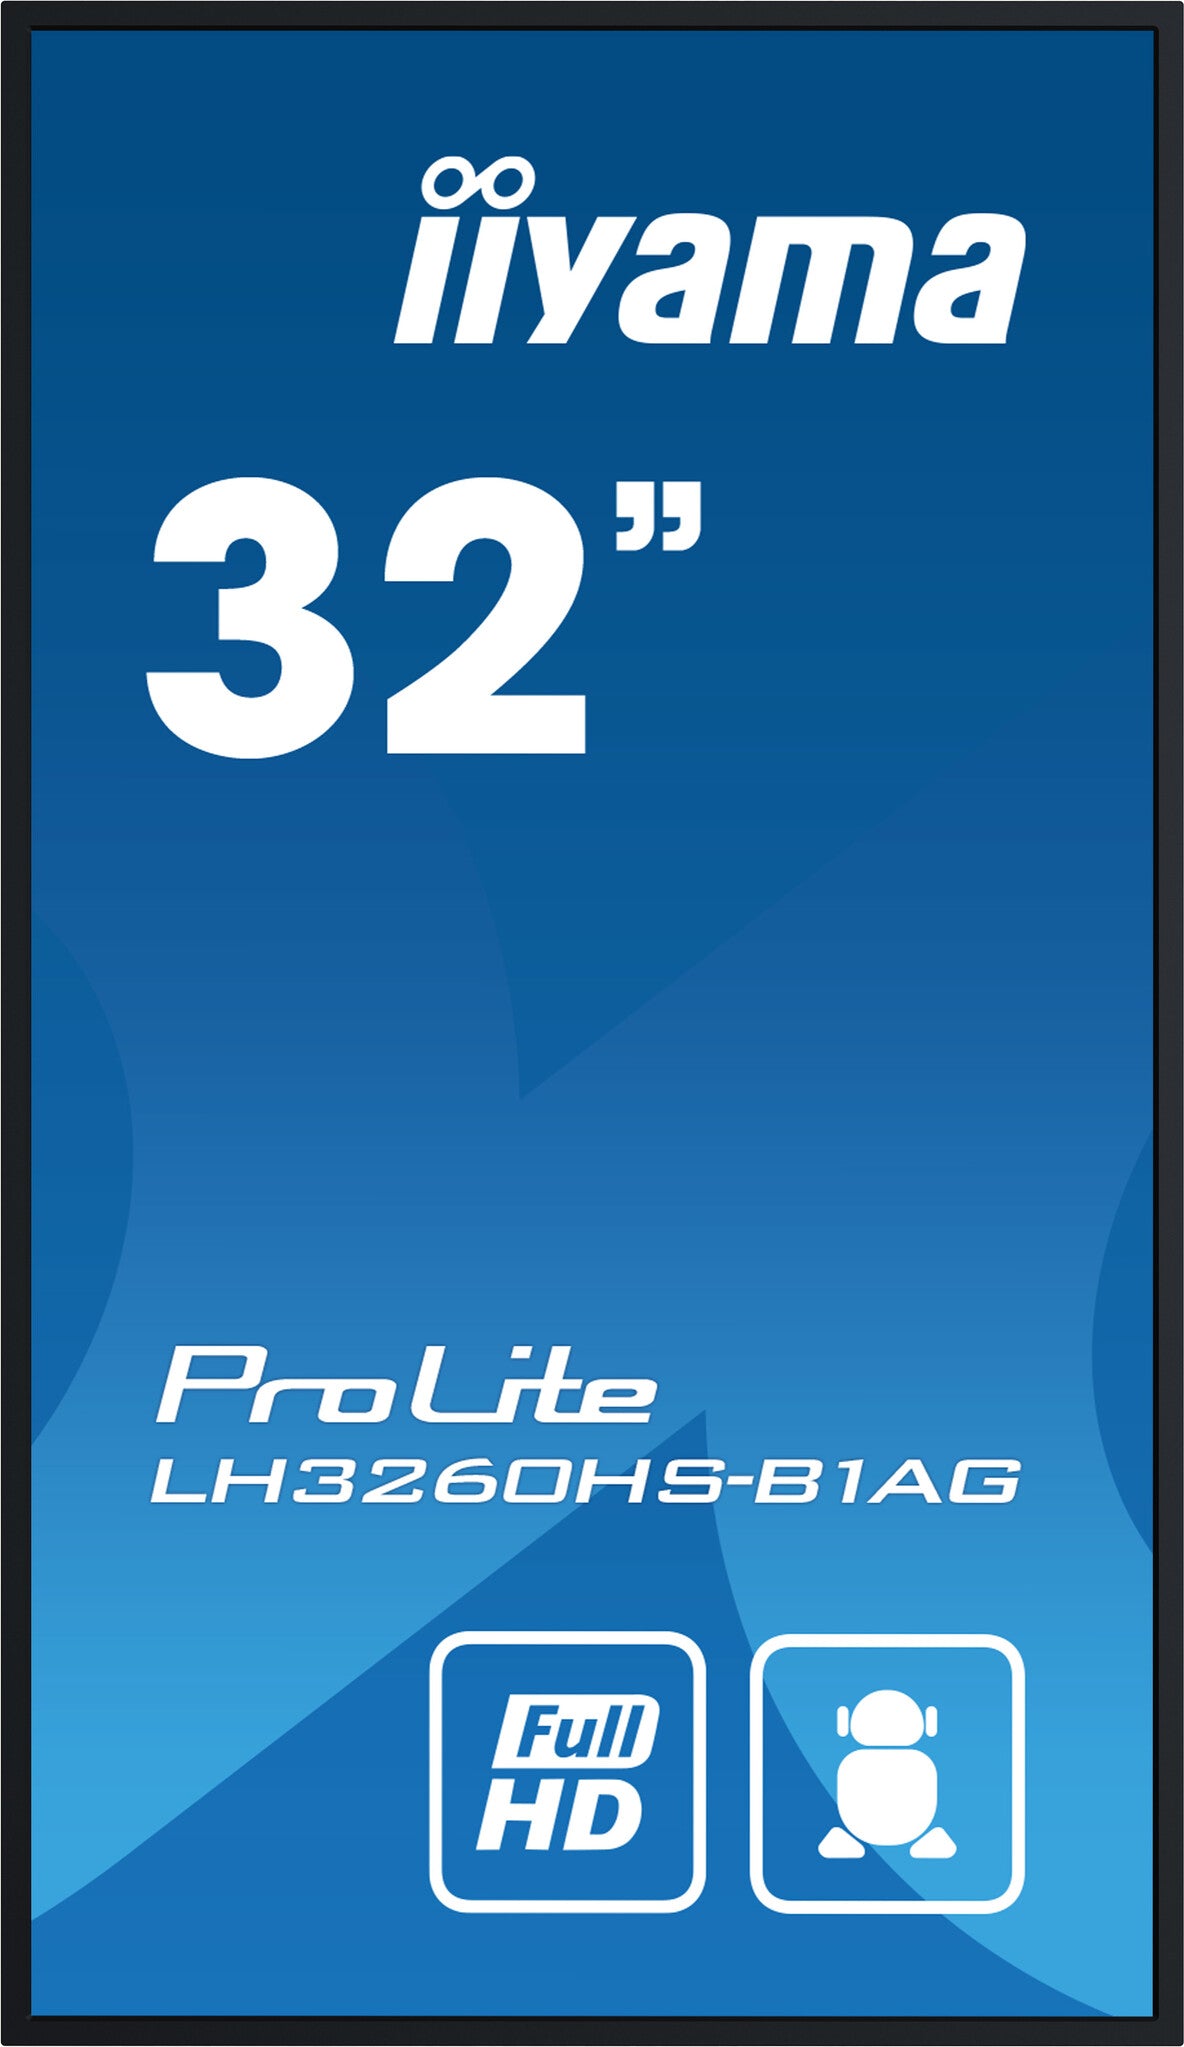 PROLITE LH3260HS-B1AG